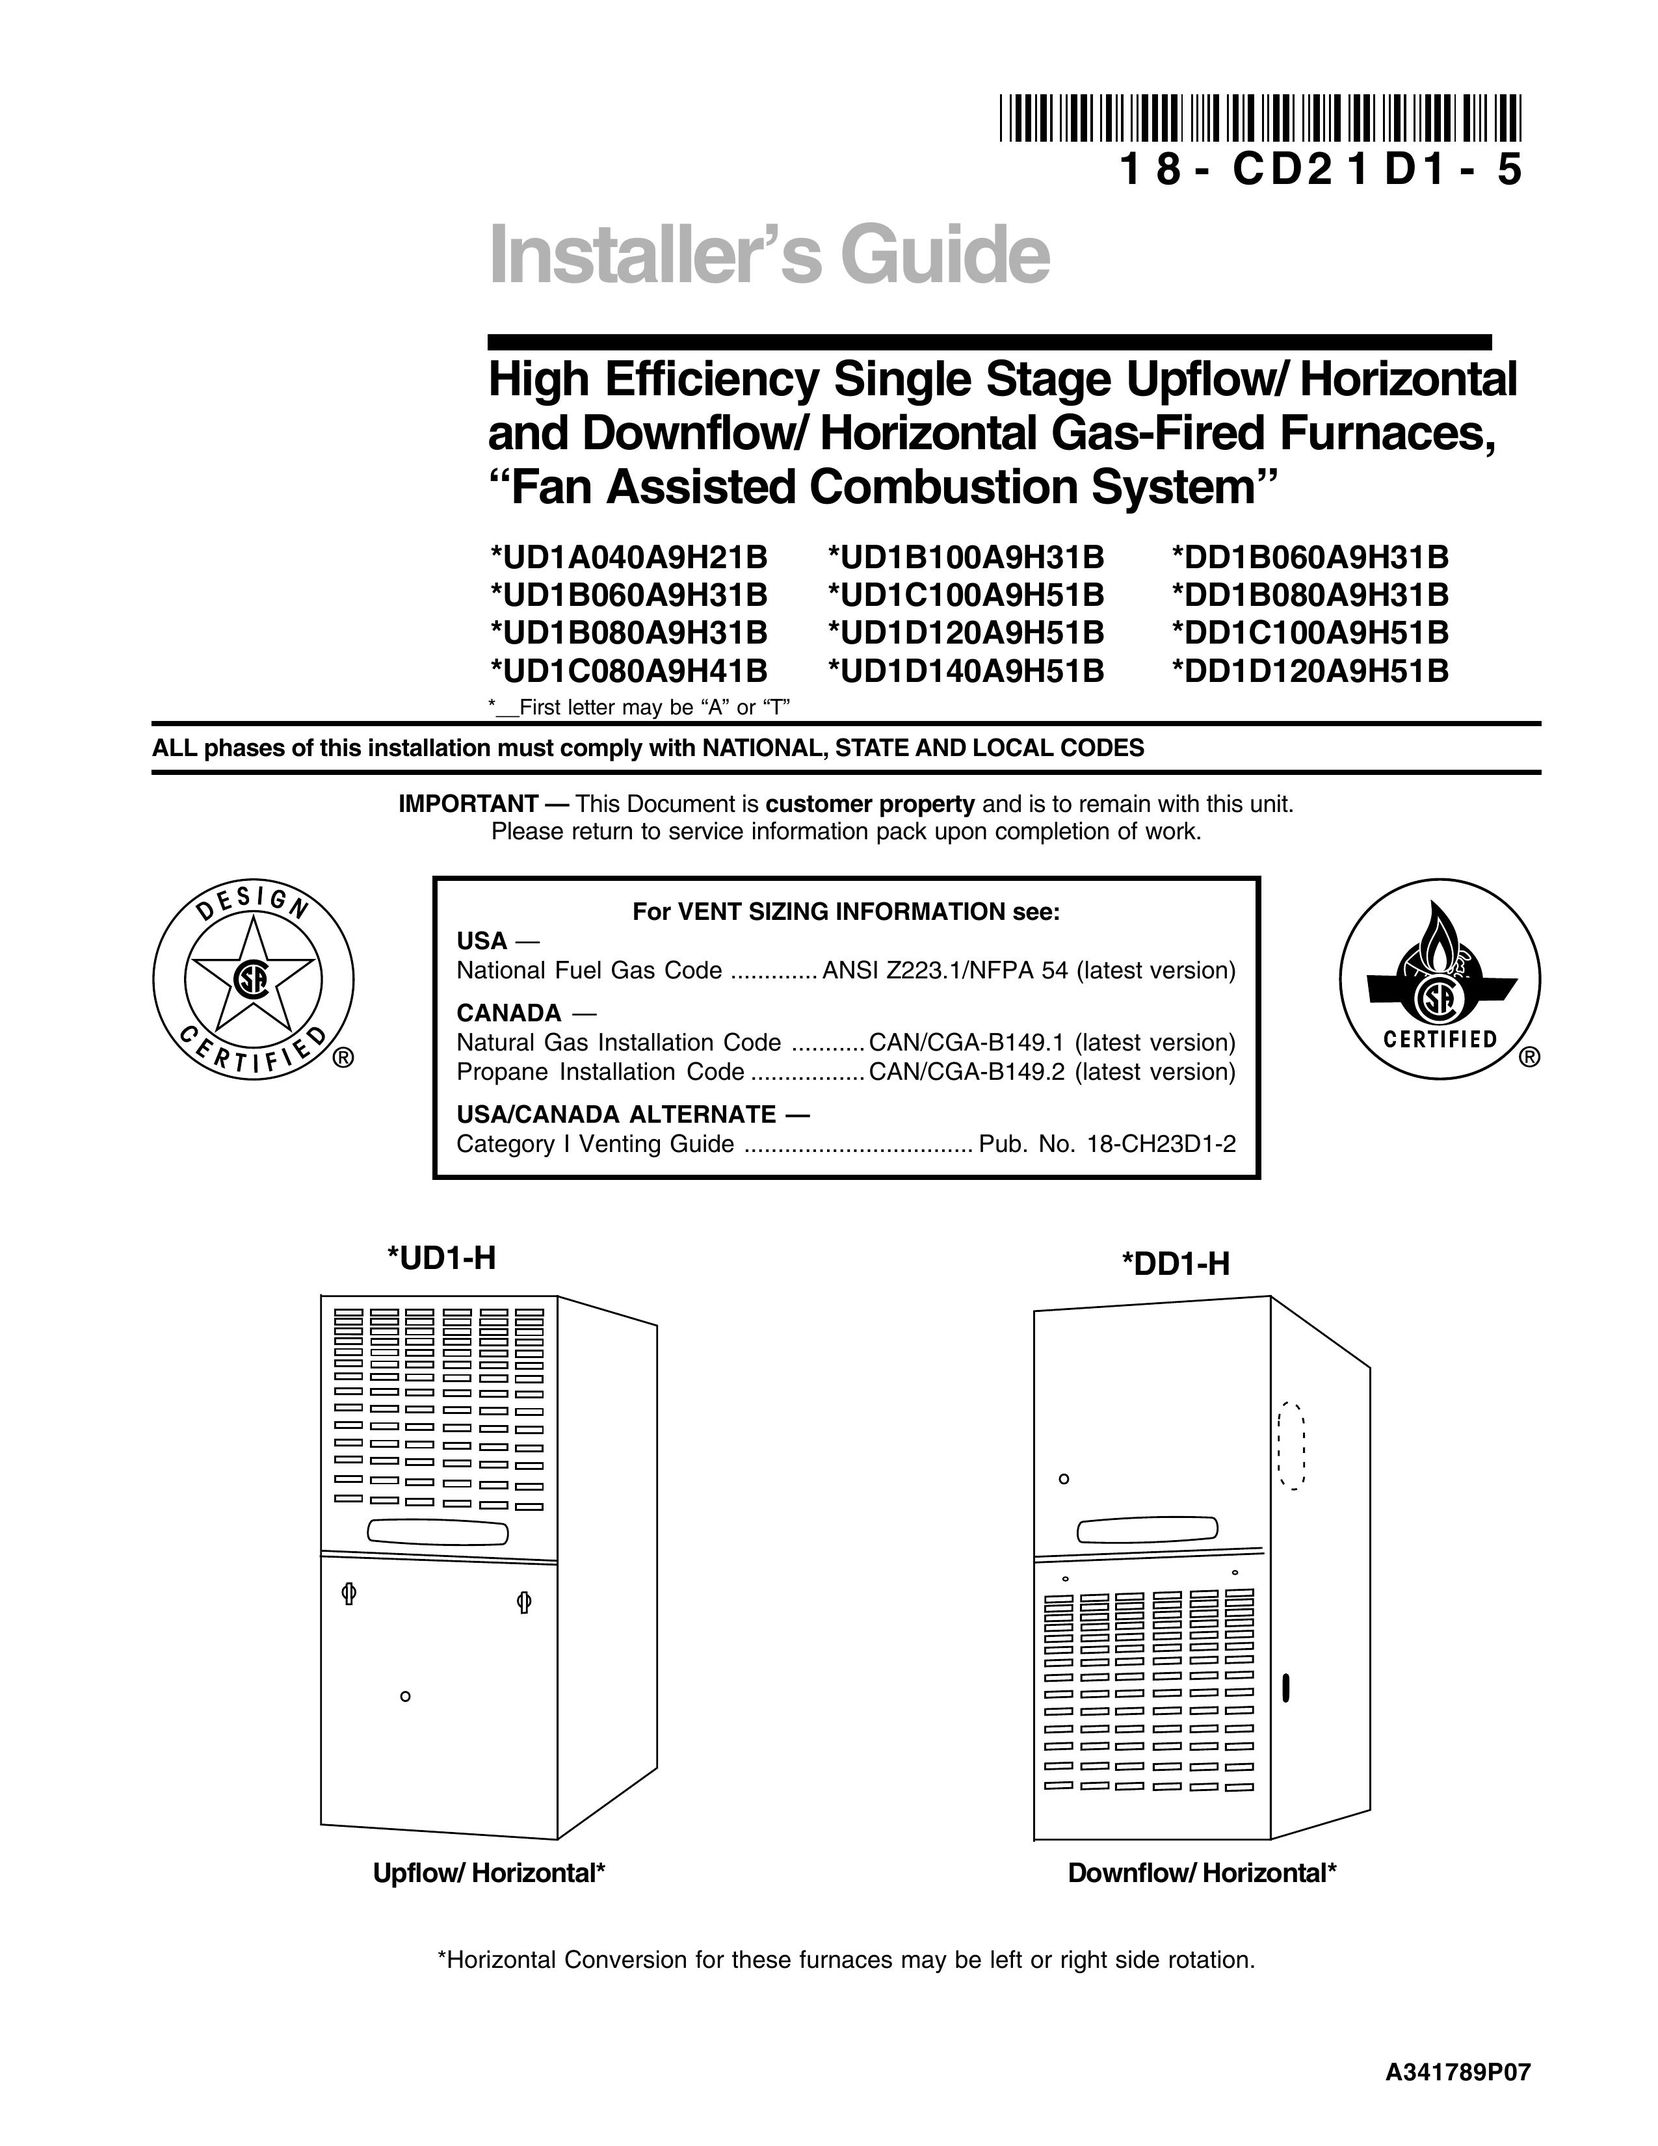 Trane UD1B080A9H31B Furnace User Manual